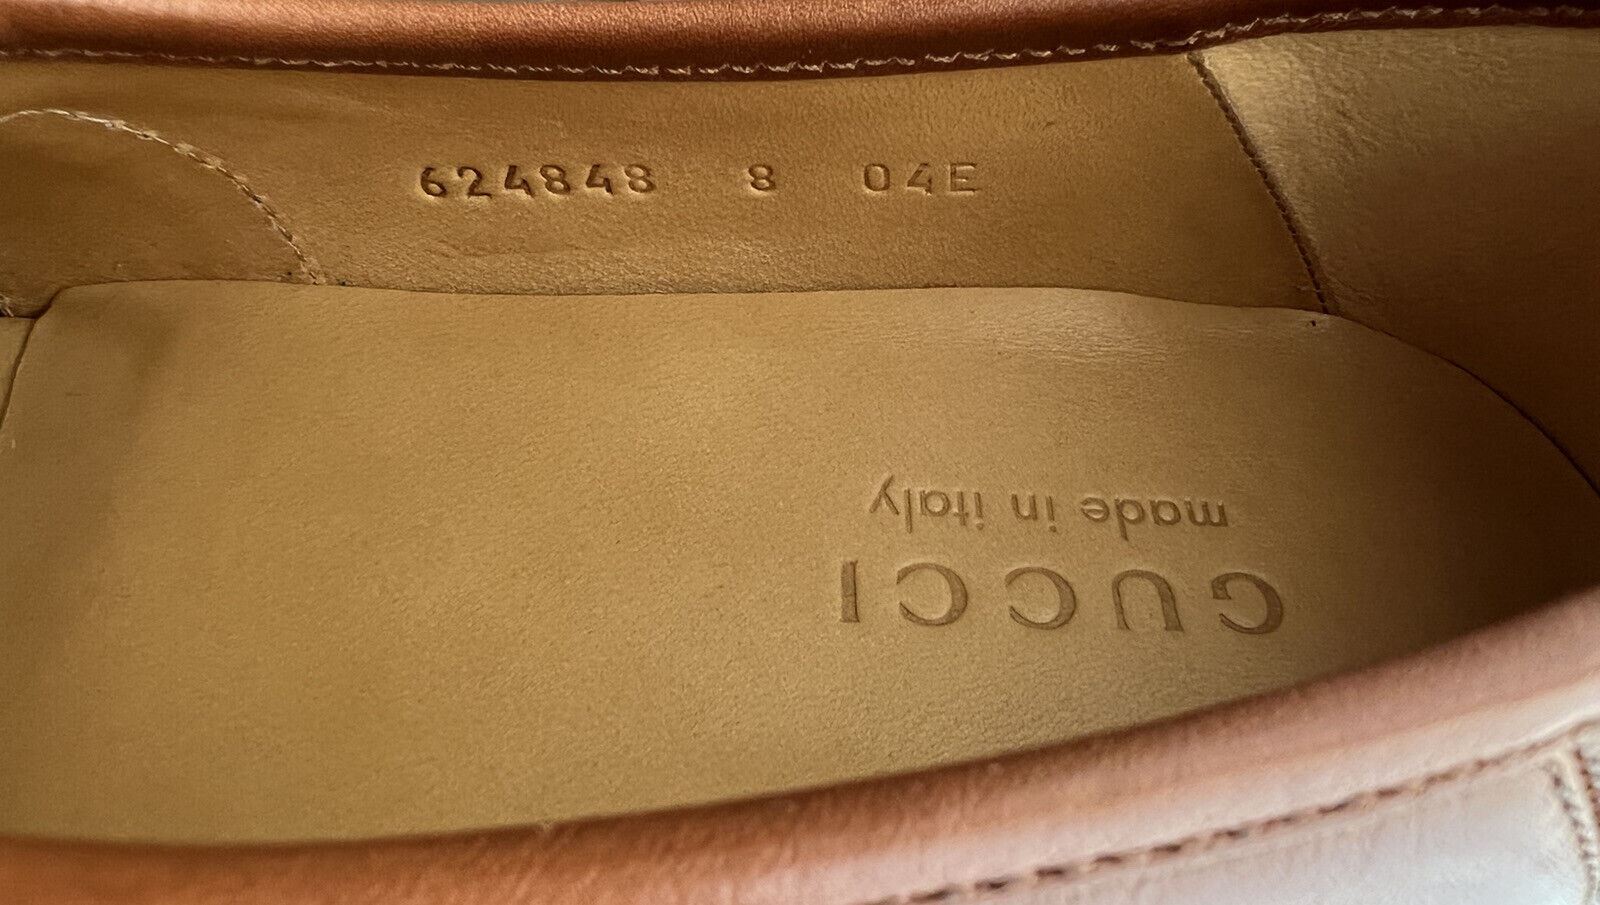 NIB Gucci Men's Brown Leather Horsebit Loafers Cut-out Details 9 US 624848